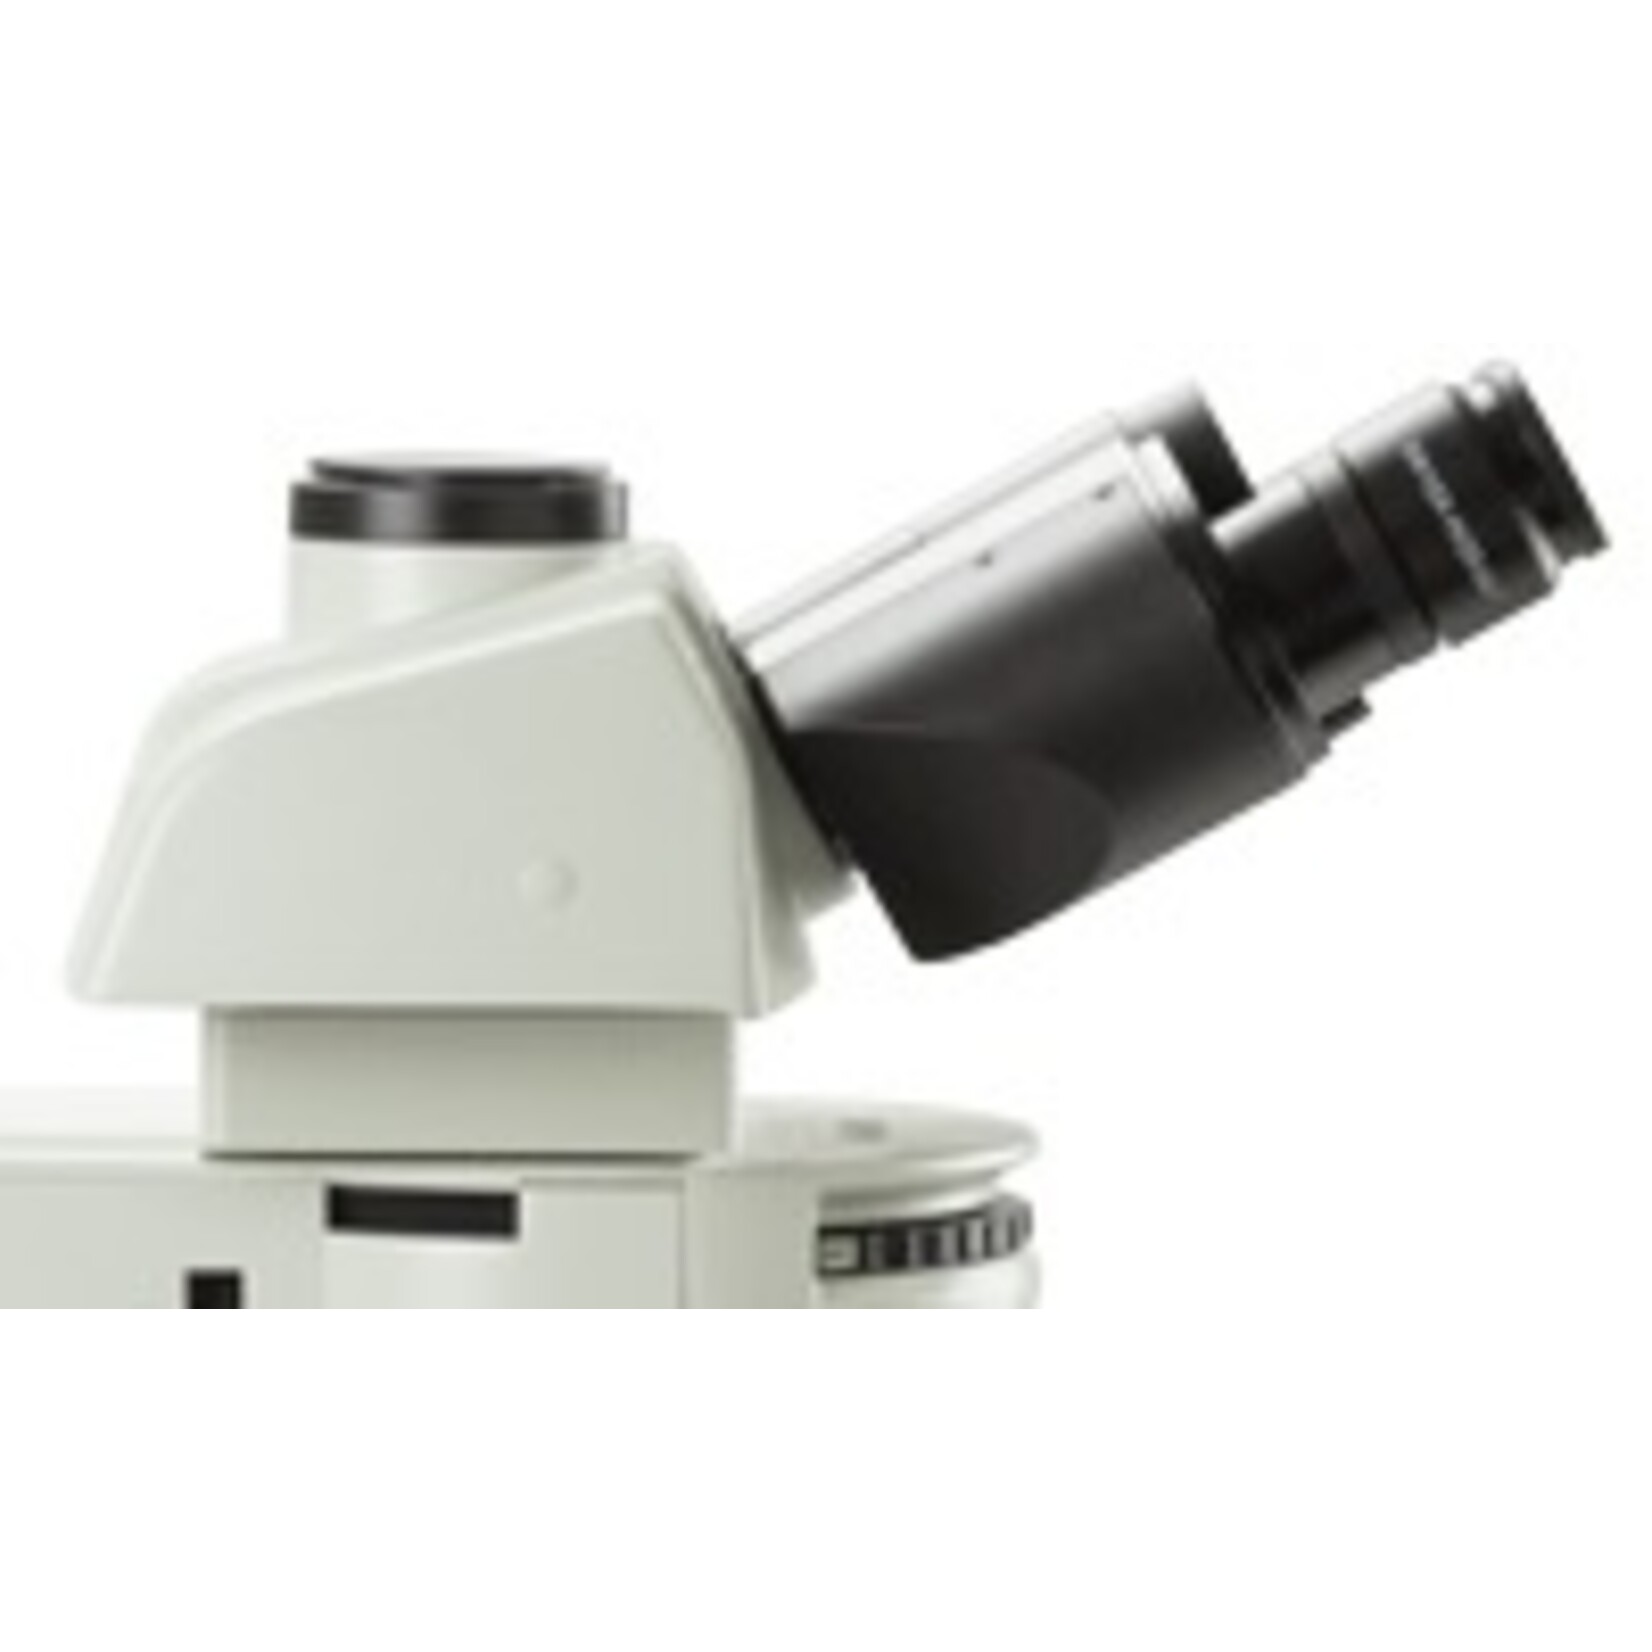 Delphi microscope for metallurgical materials testing